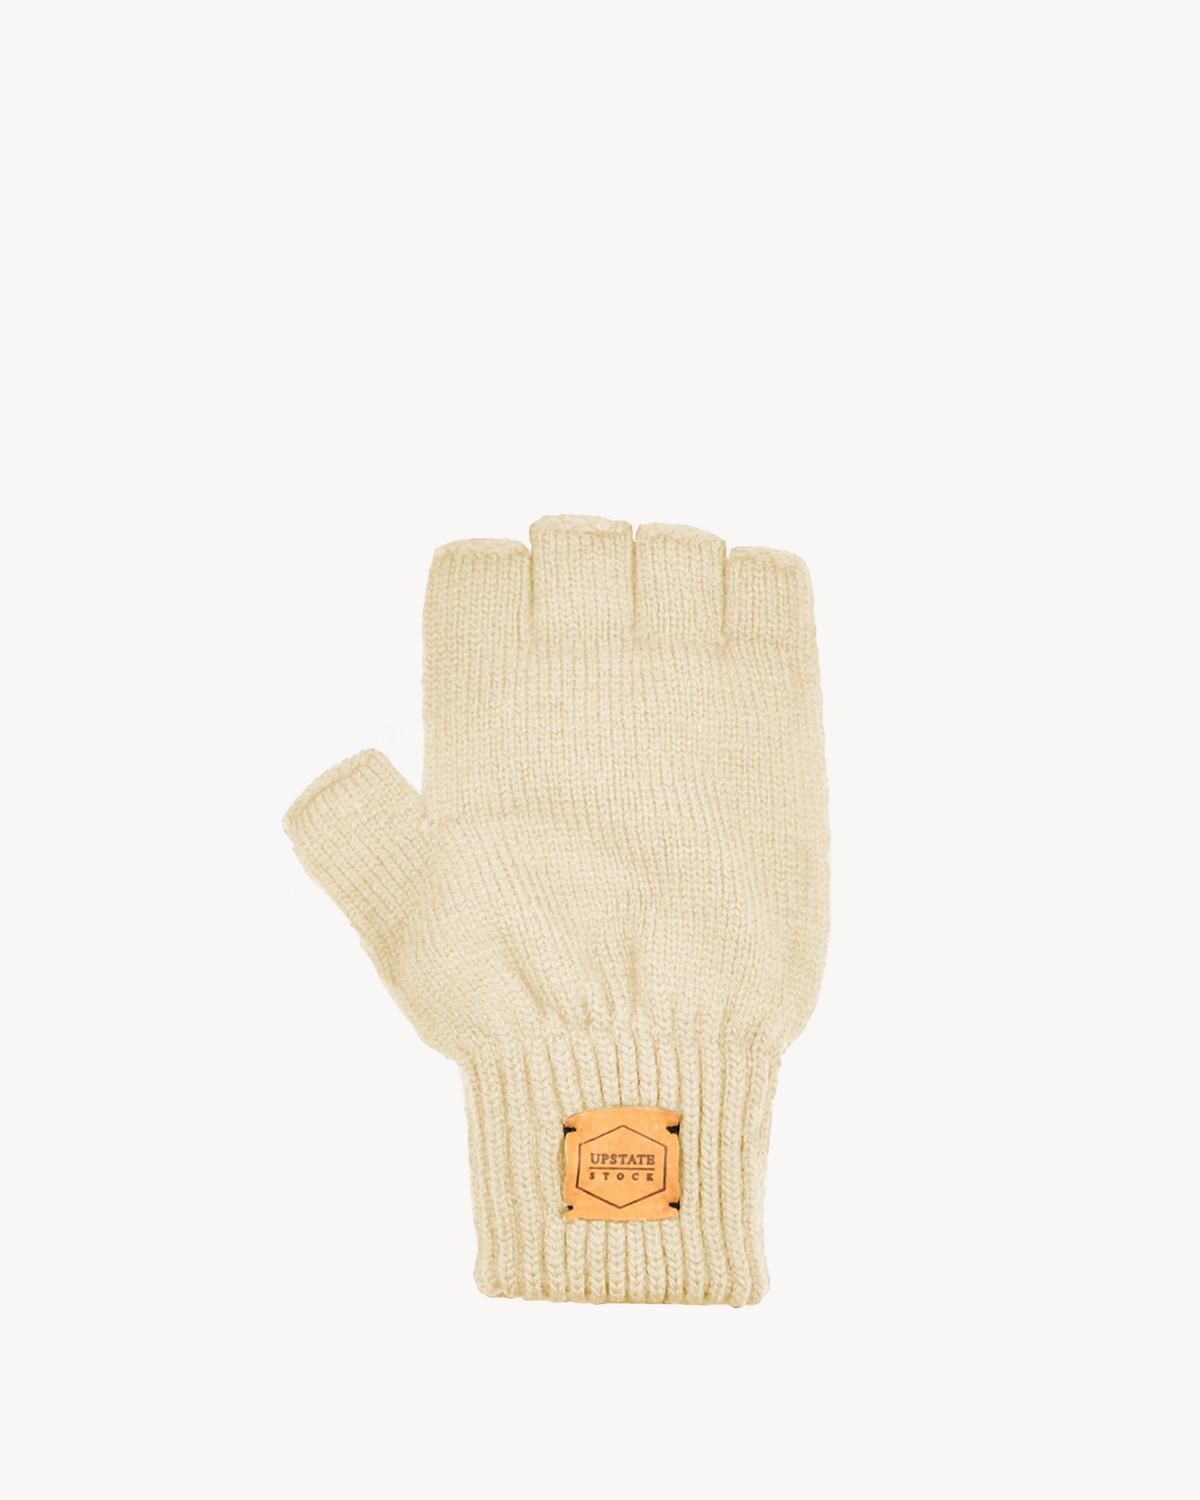 Undyed Merino Wool Fingerless Glove